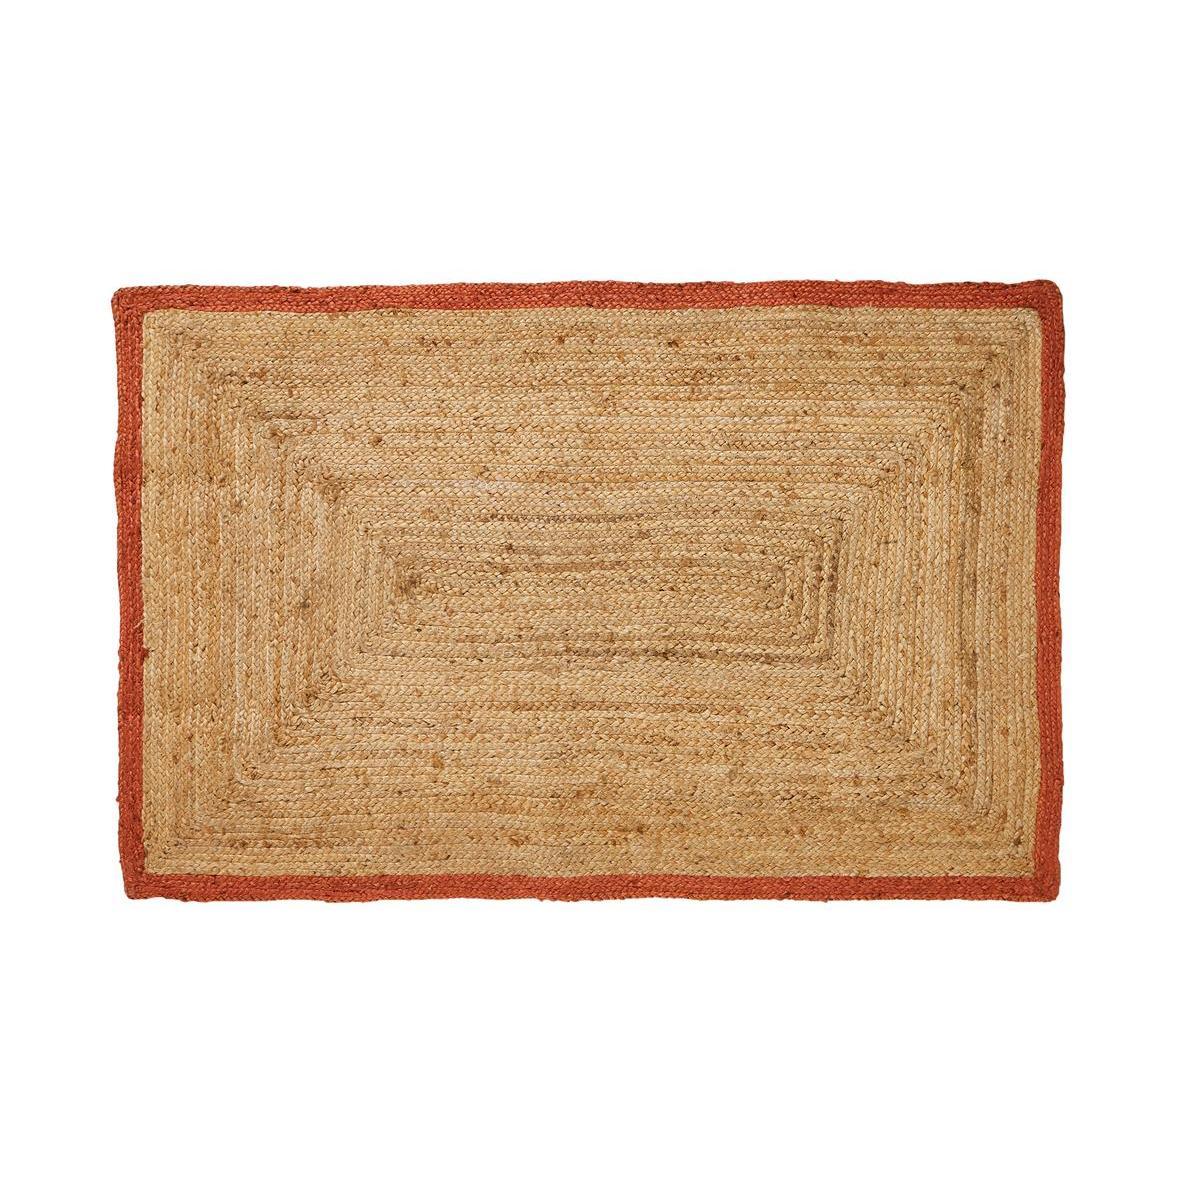 Tapis jute - 100 x 150 cm - Beige, rouge terracotta